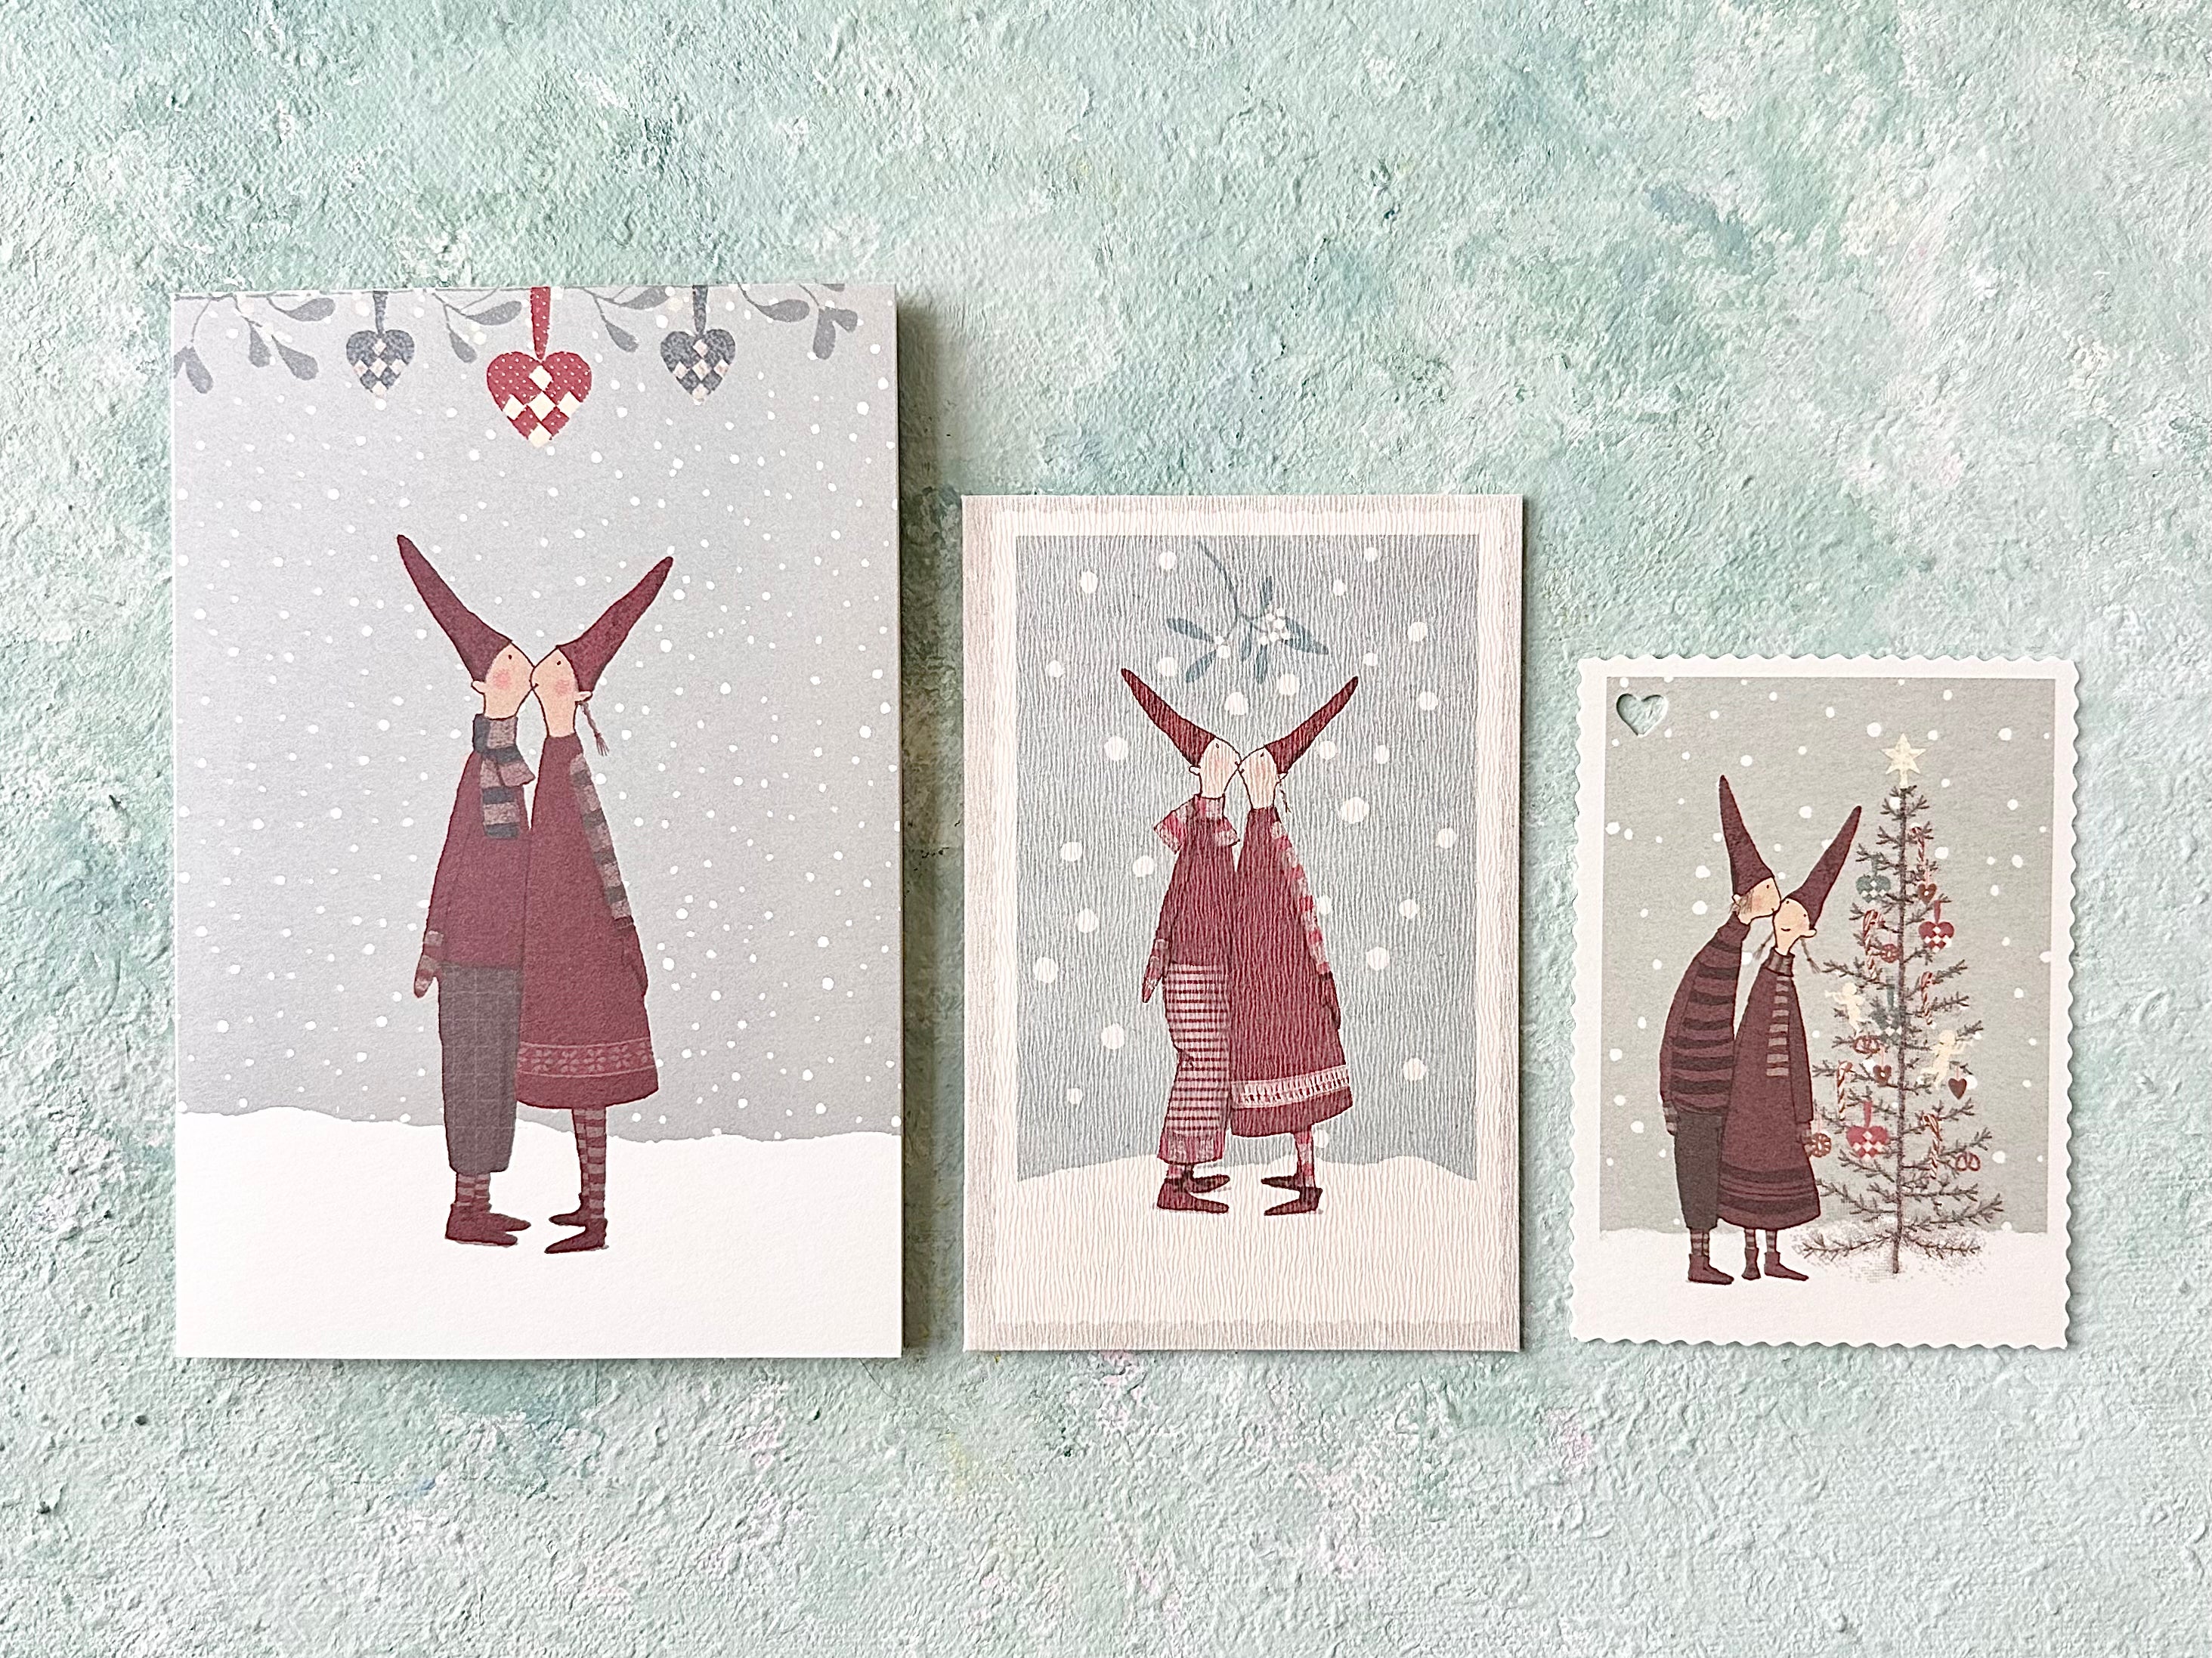 Small Christmas Card ”December Days” - 2009